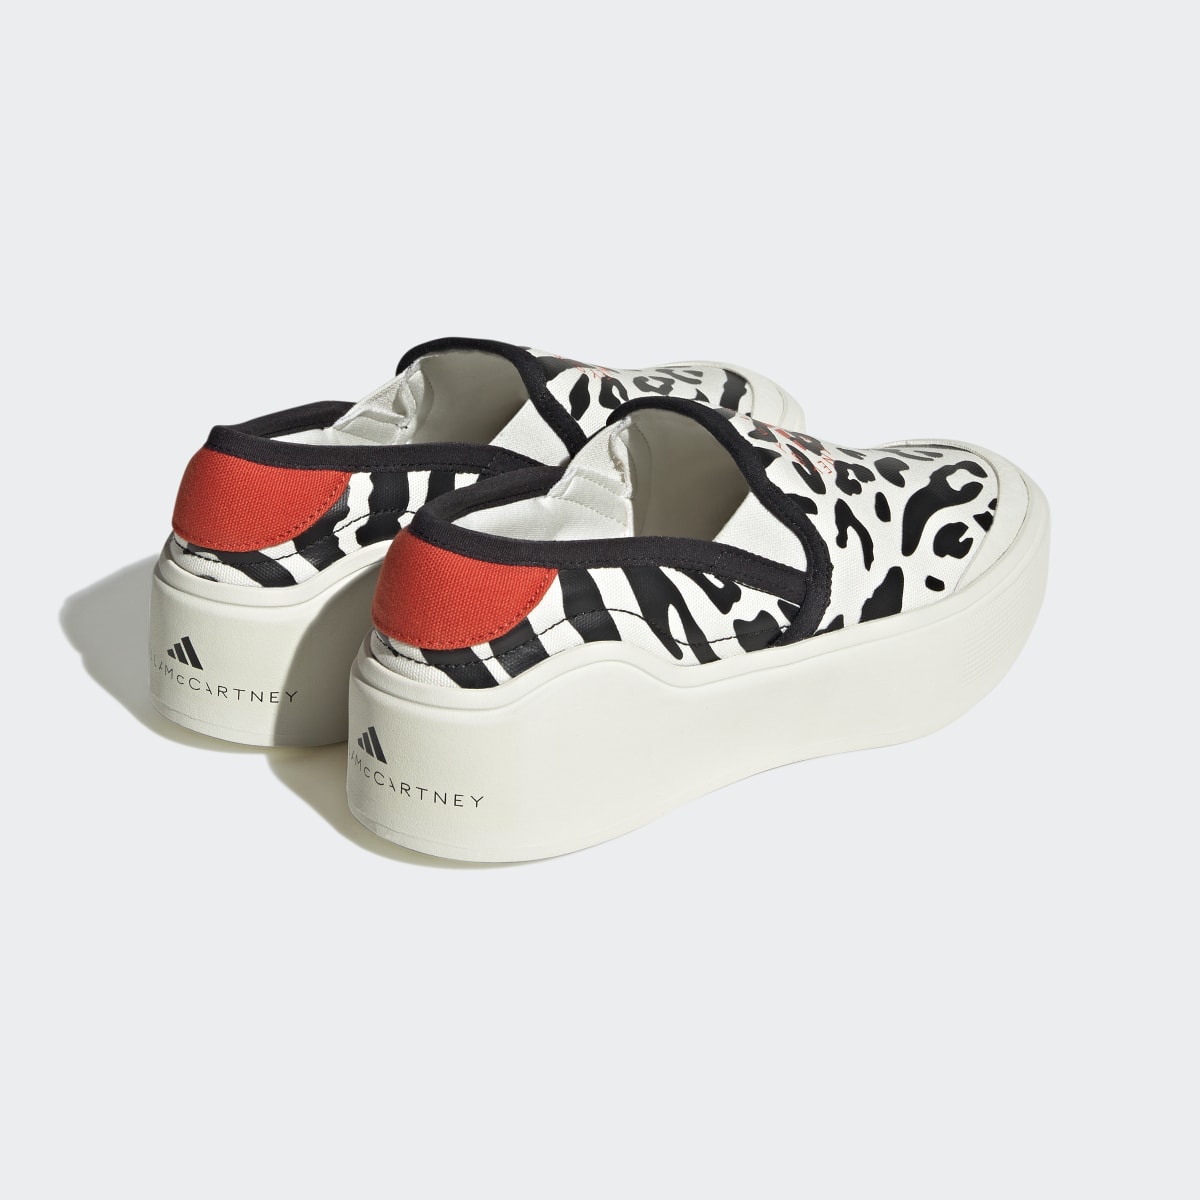 Adidas by Stella McCartney Court Slip-On Shoes. 6